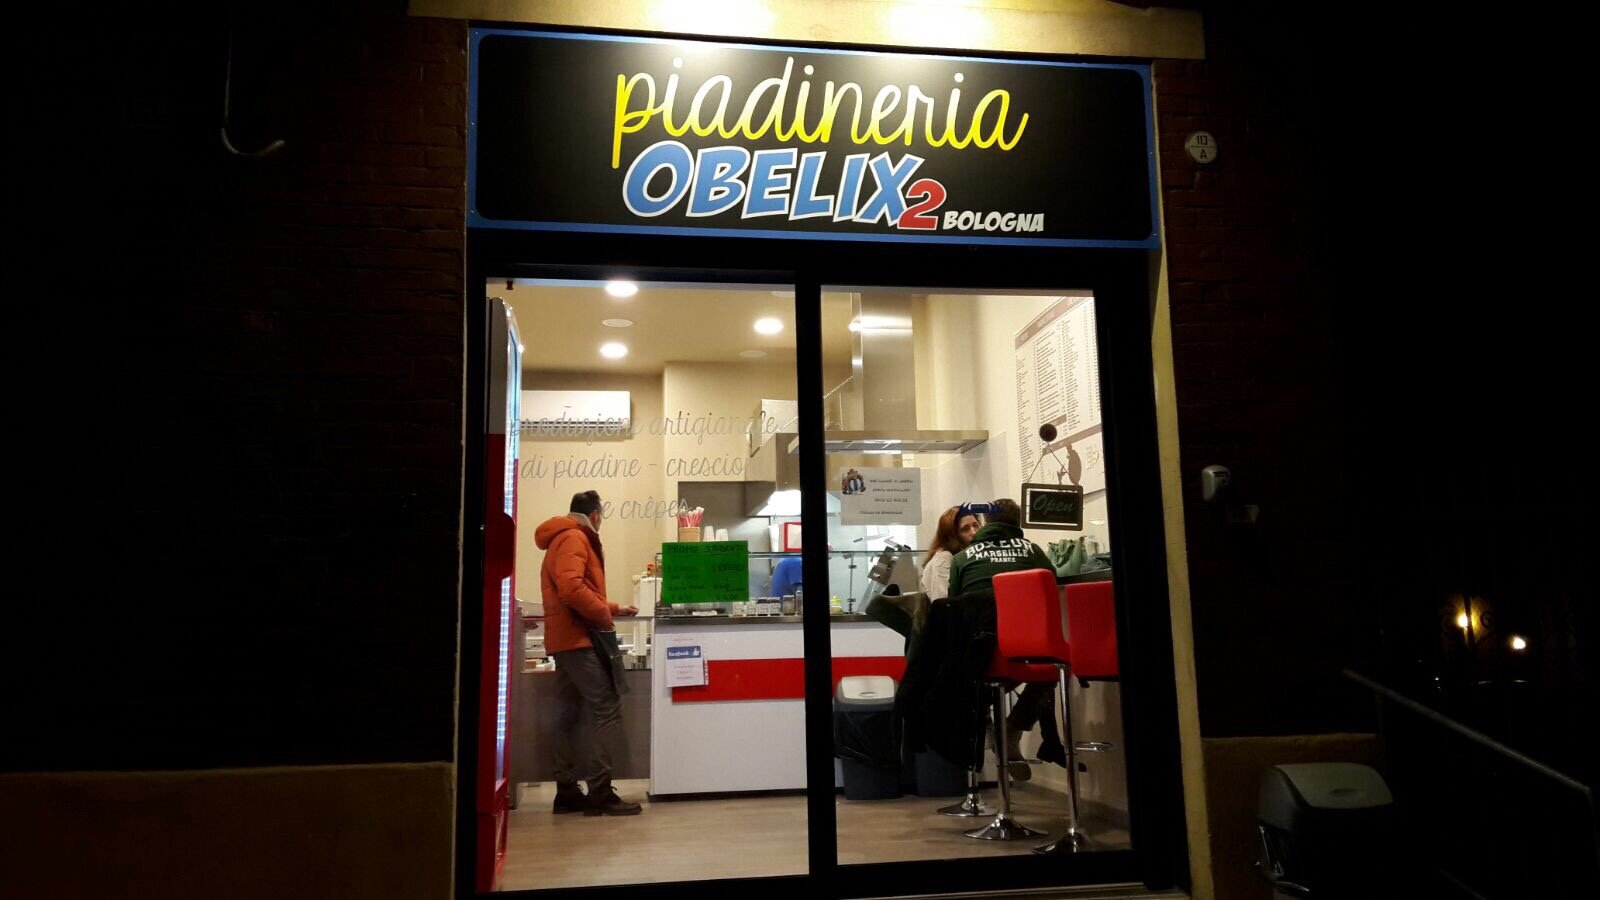 Piadineria Obelix2, Bologna